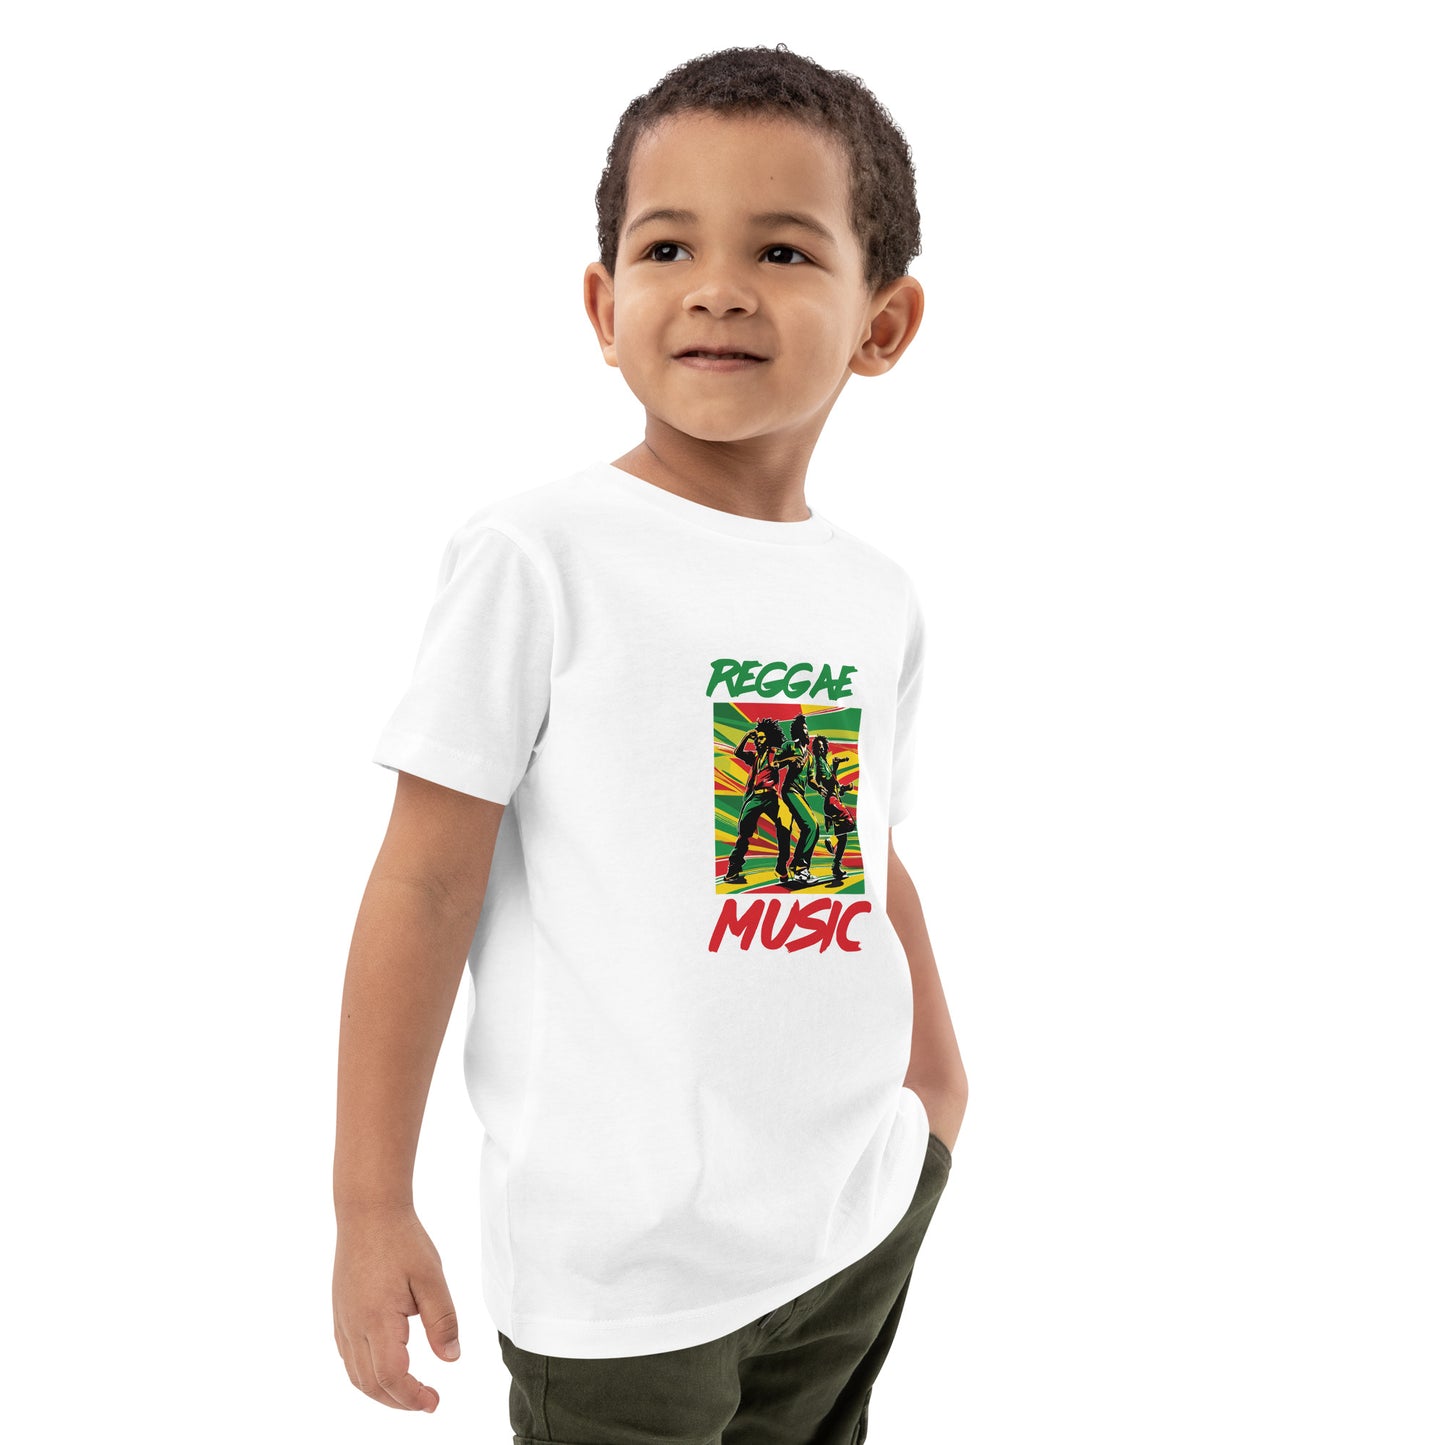 Organic cotton kids "Reggae Music" t-shirt